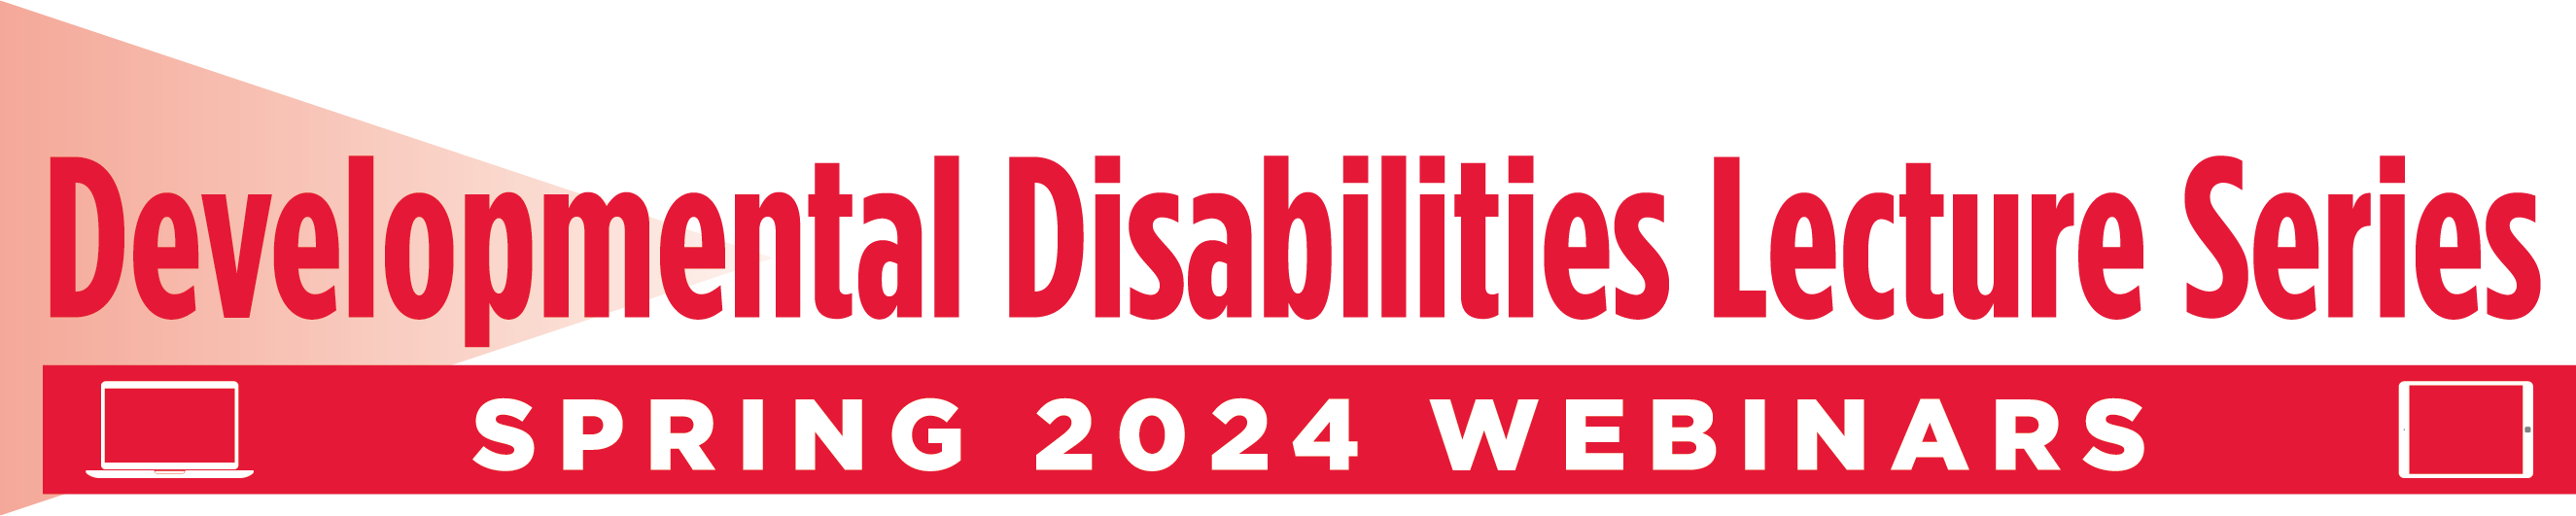 Developmental Disabilities Lecture Series Spring 2024 Webinars